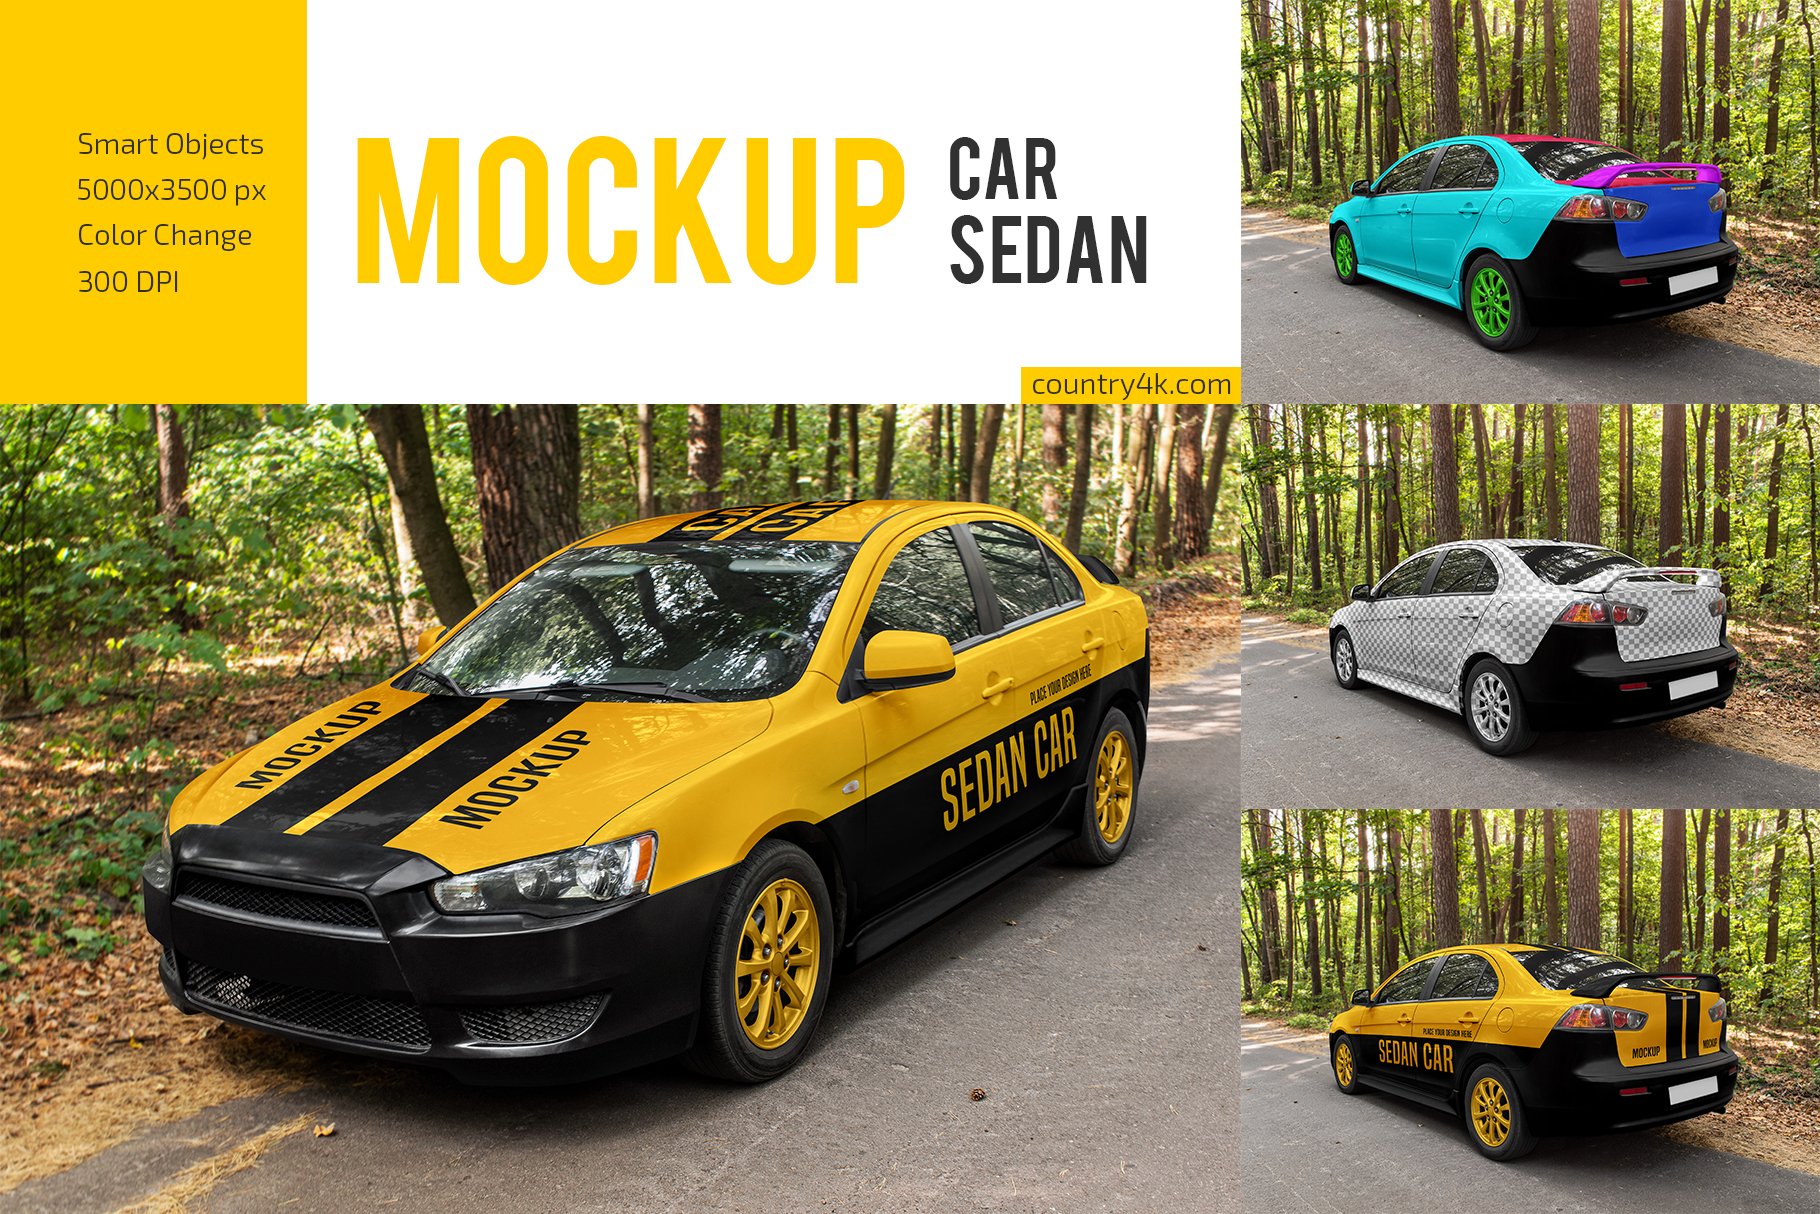 Car Sedan Mockup Set cover image.